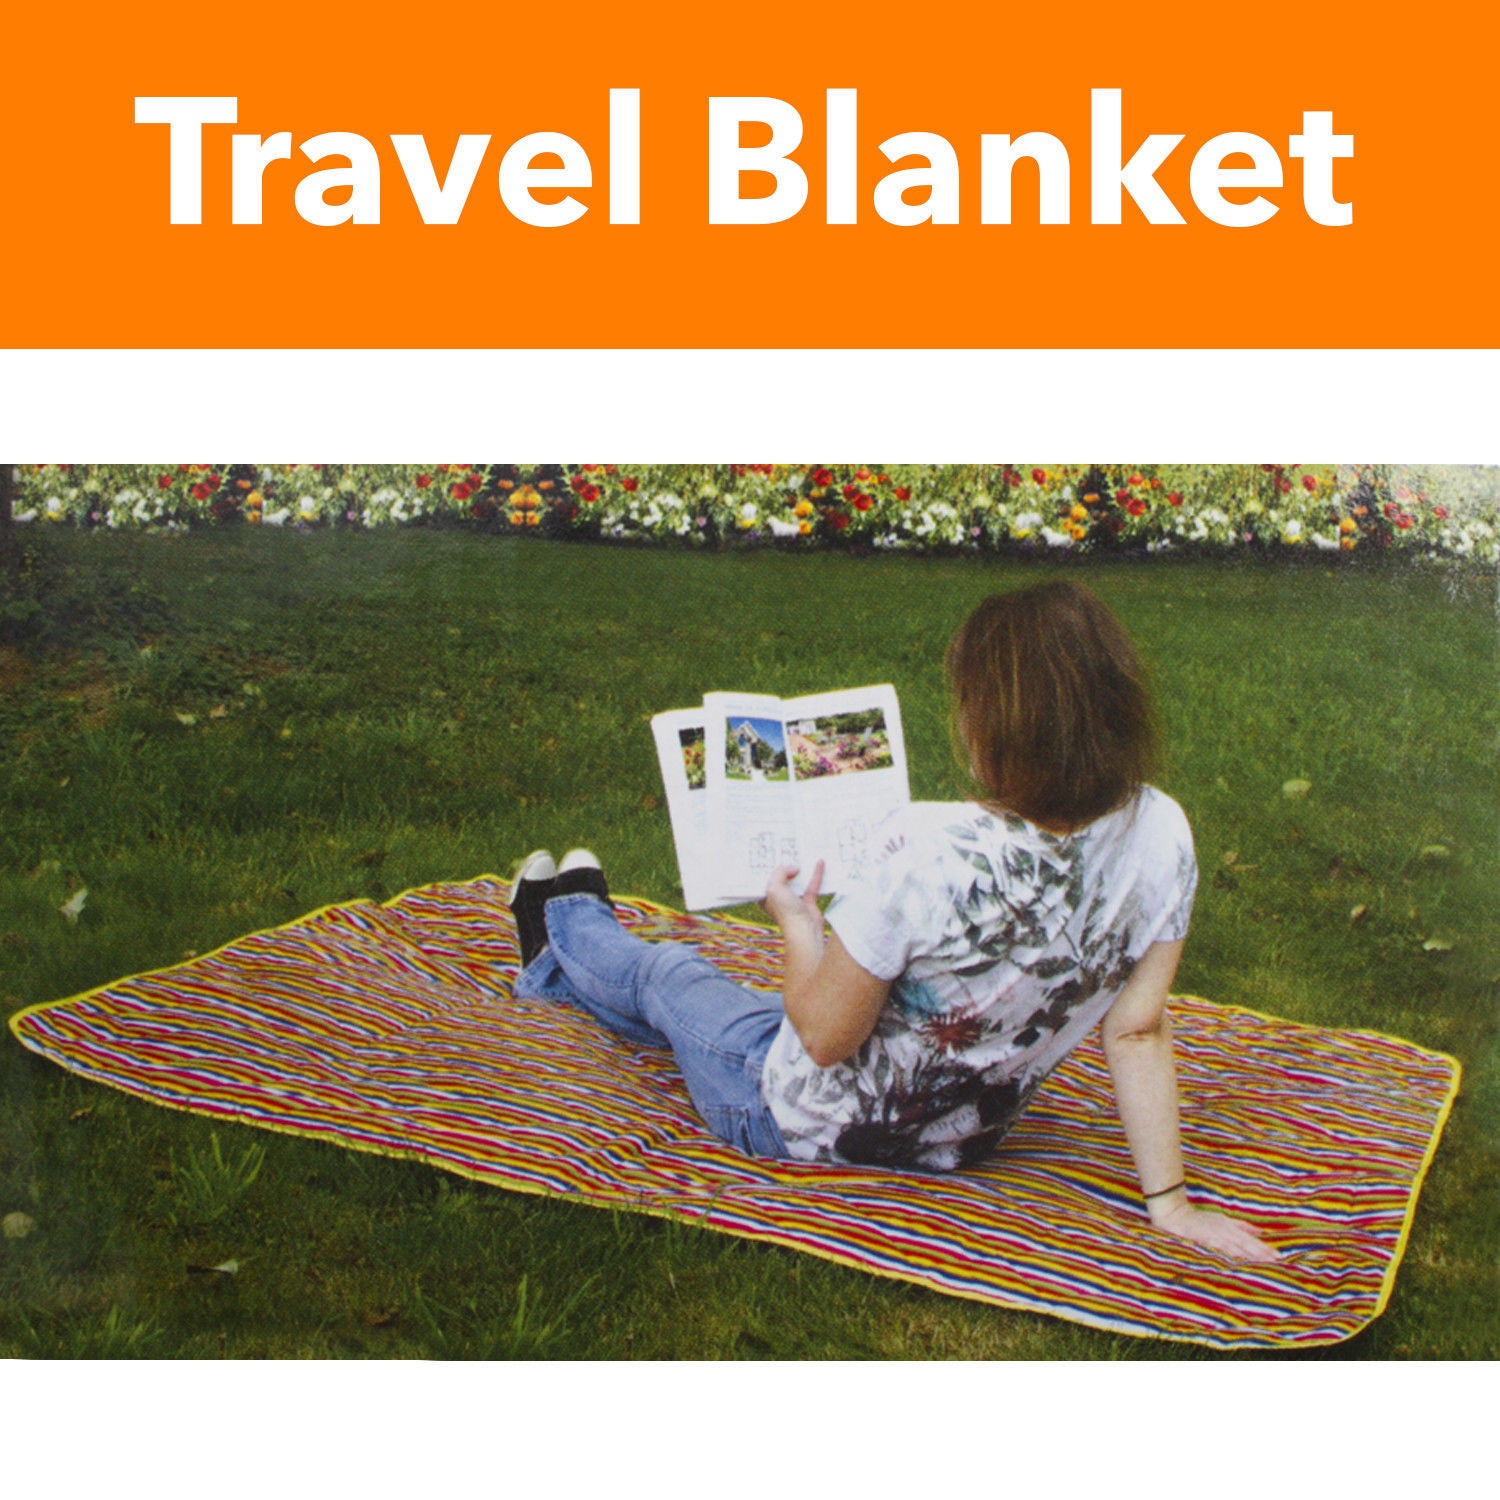 Waterproof Picnic Blanket – Large Beach Blanket - Outdoor Travel Picnic Mat Blue